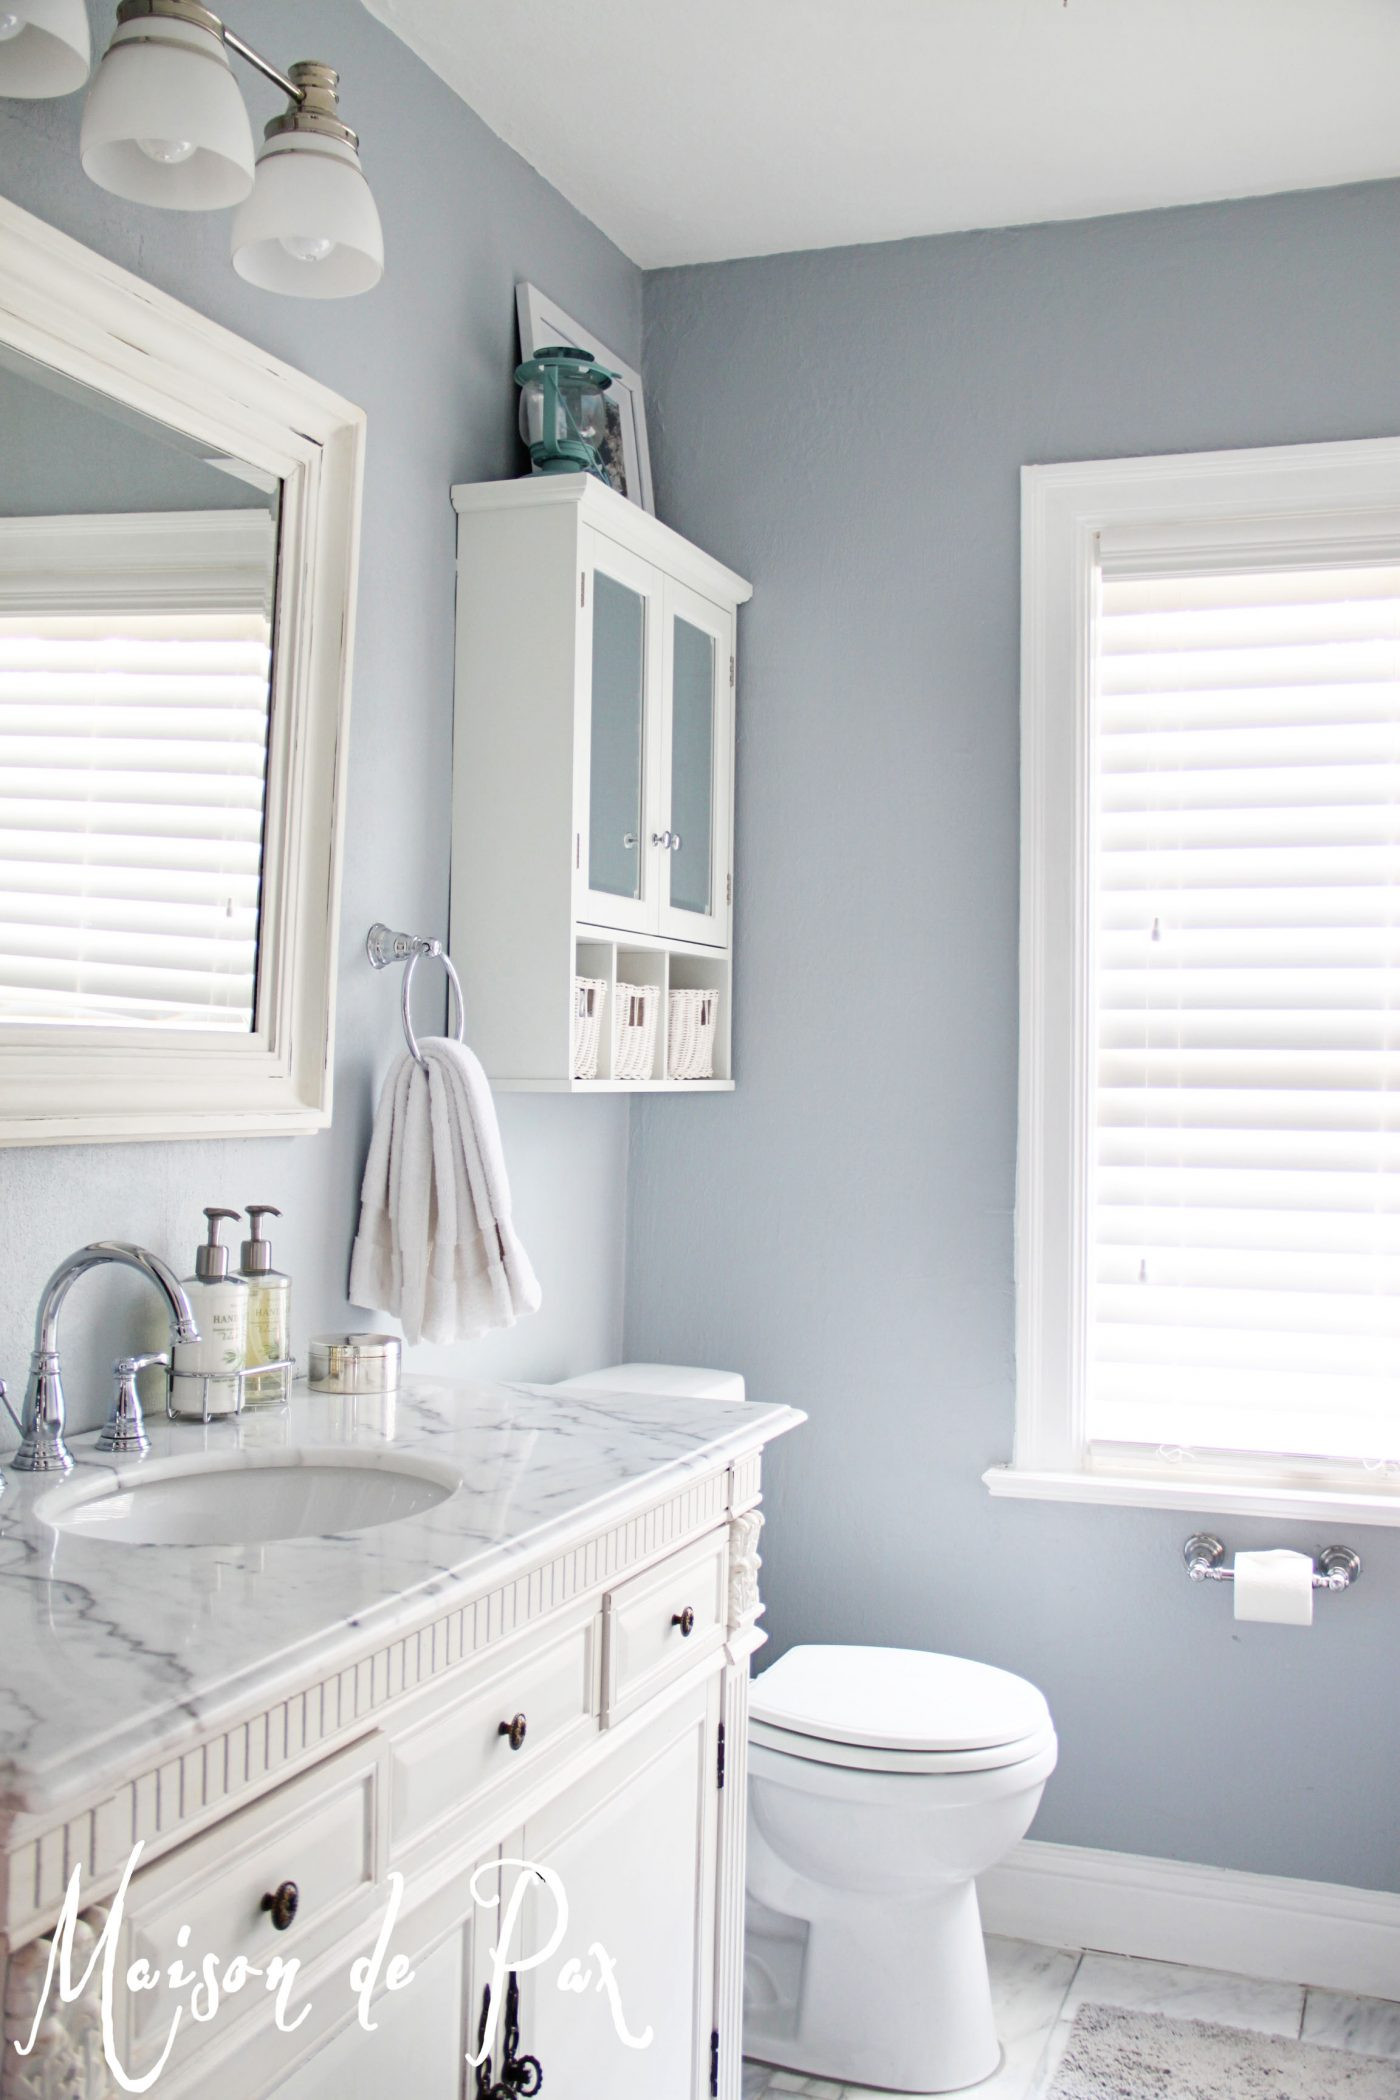 Popular Bathroom Colors
 10 Tips for Designing a Small Bathroom Maison de Pax